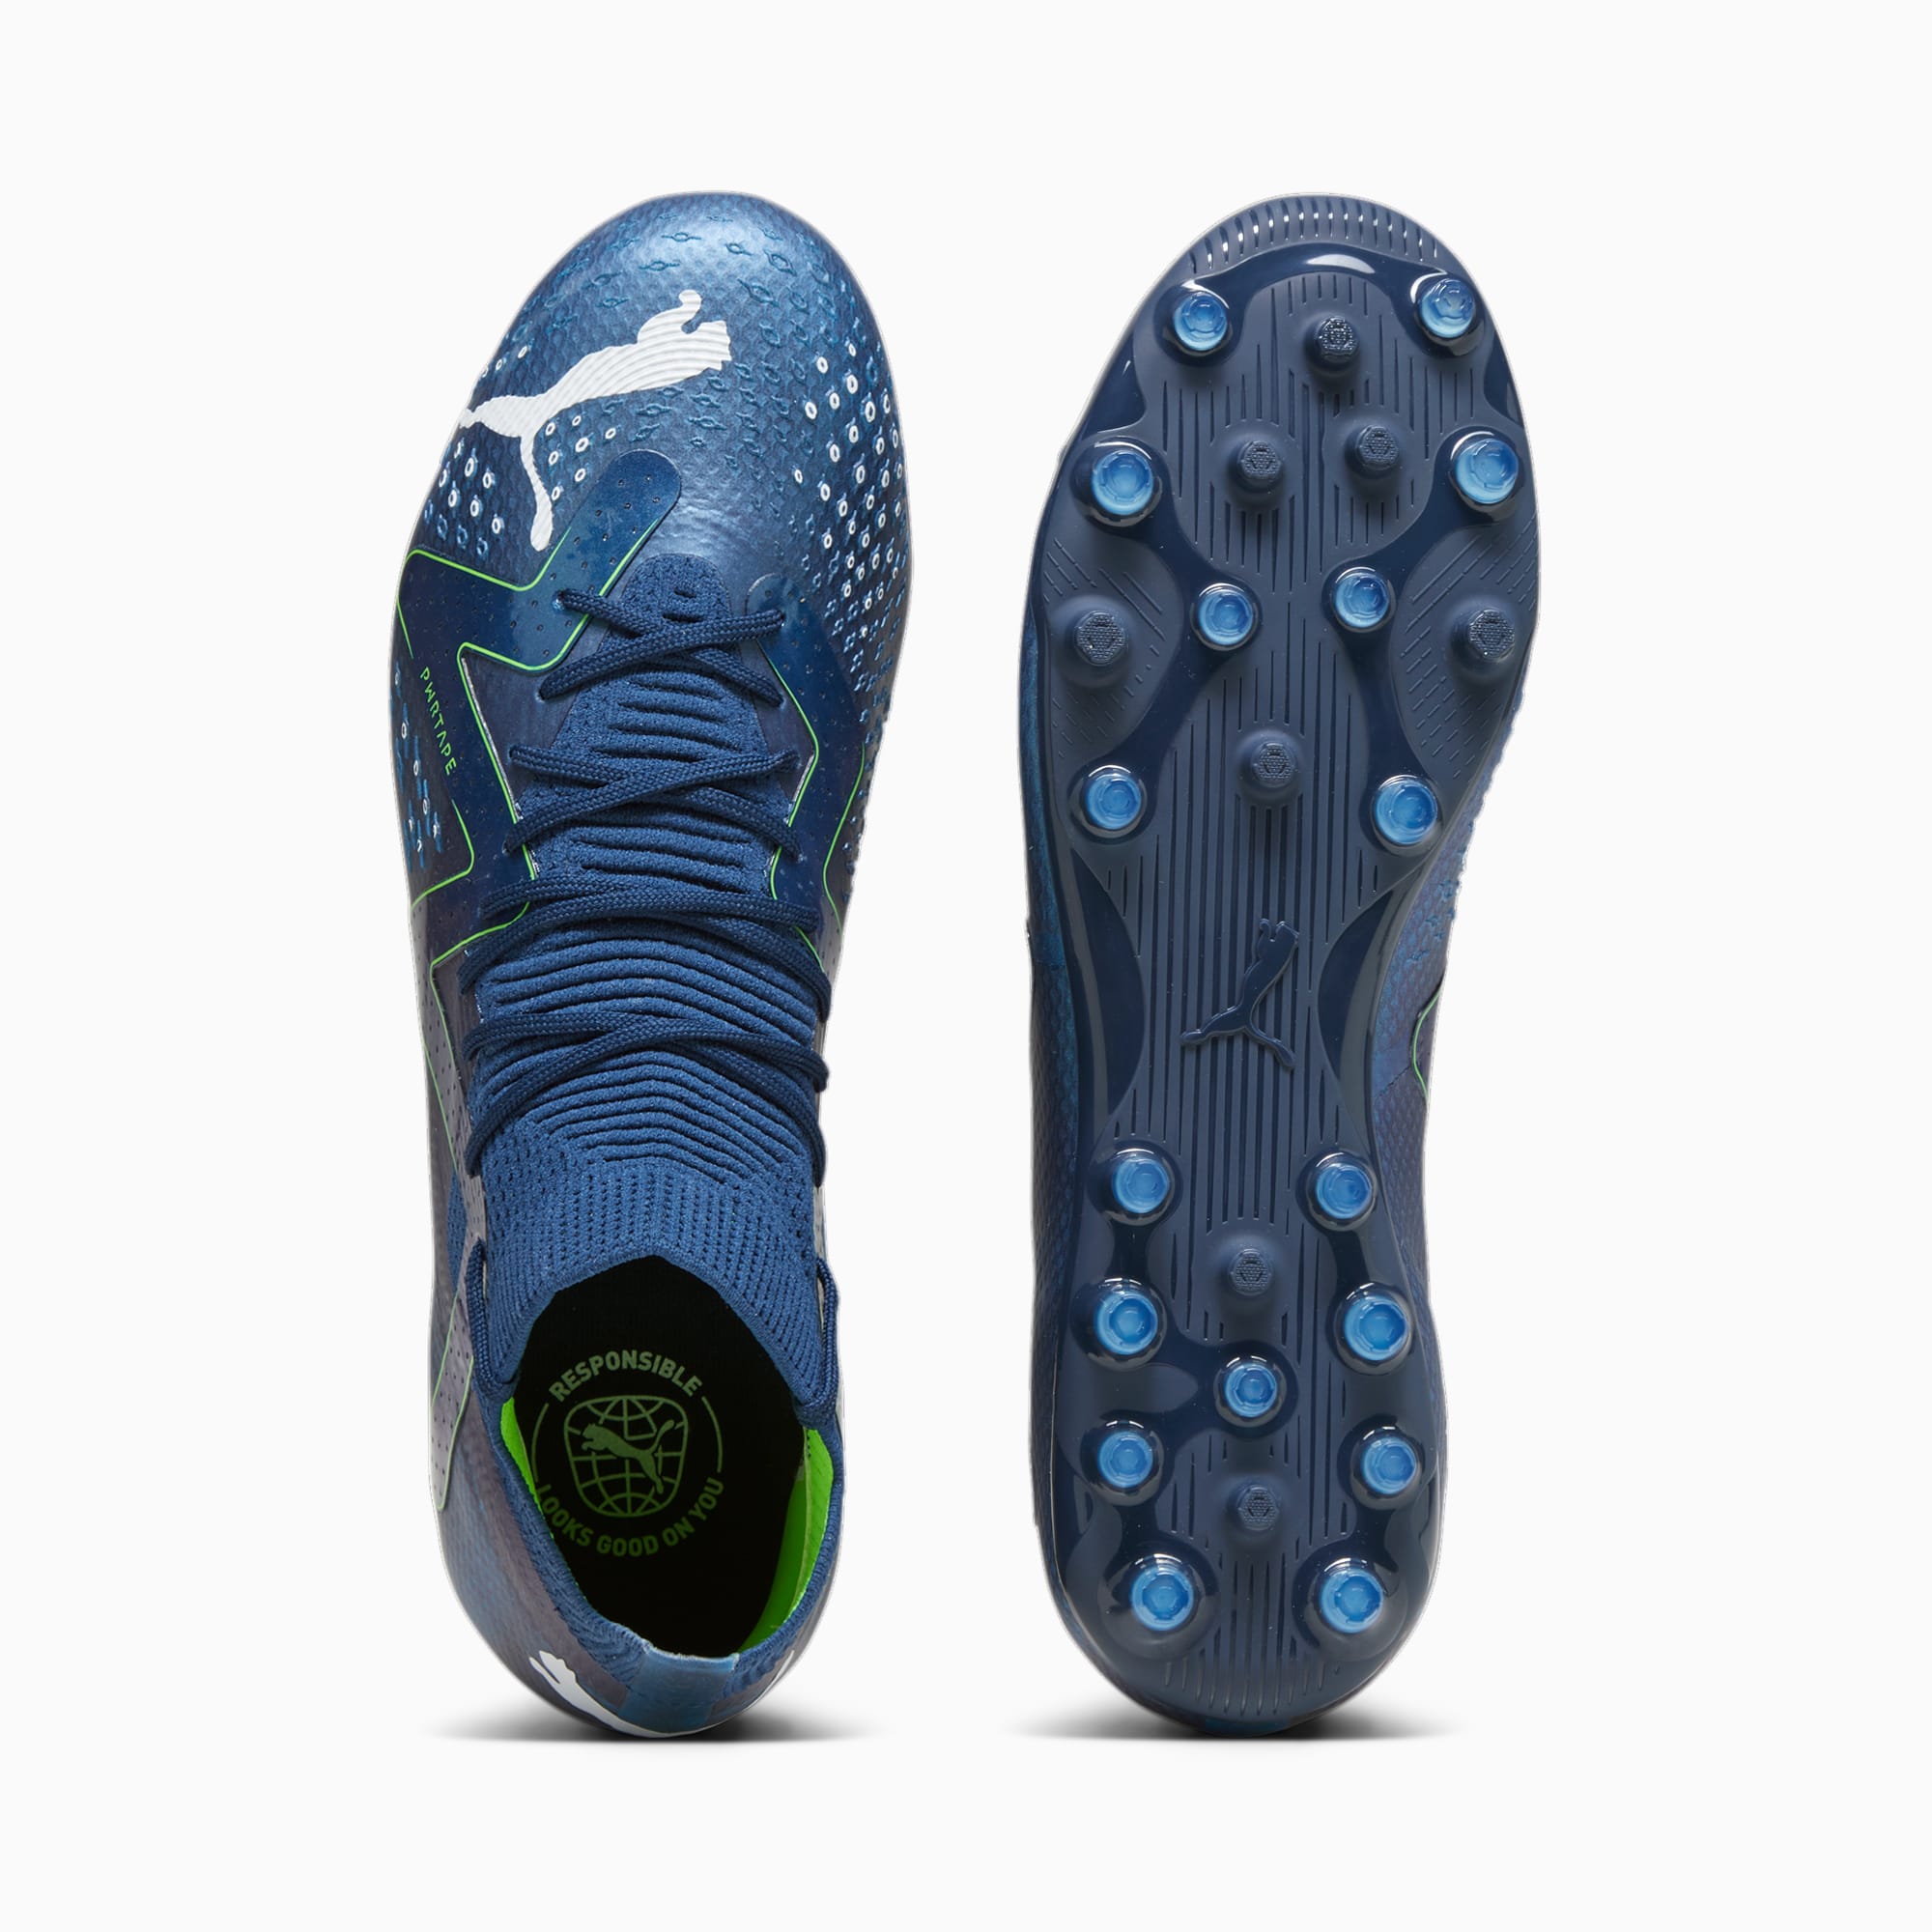 PUMA Chaussures De Football FUTURE PRO MG Pour Homme, Bleu/Vert/Blanc